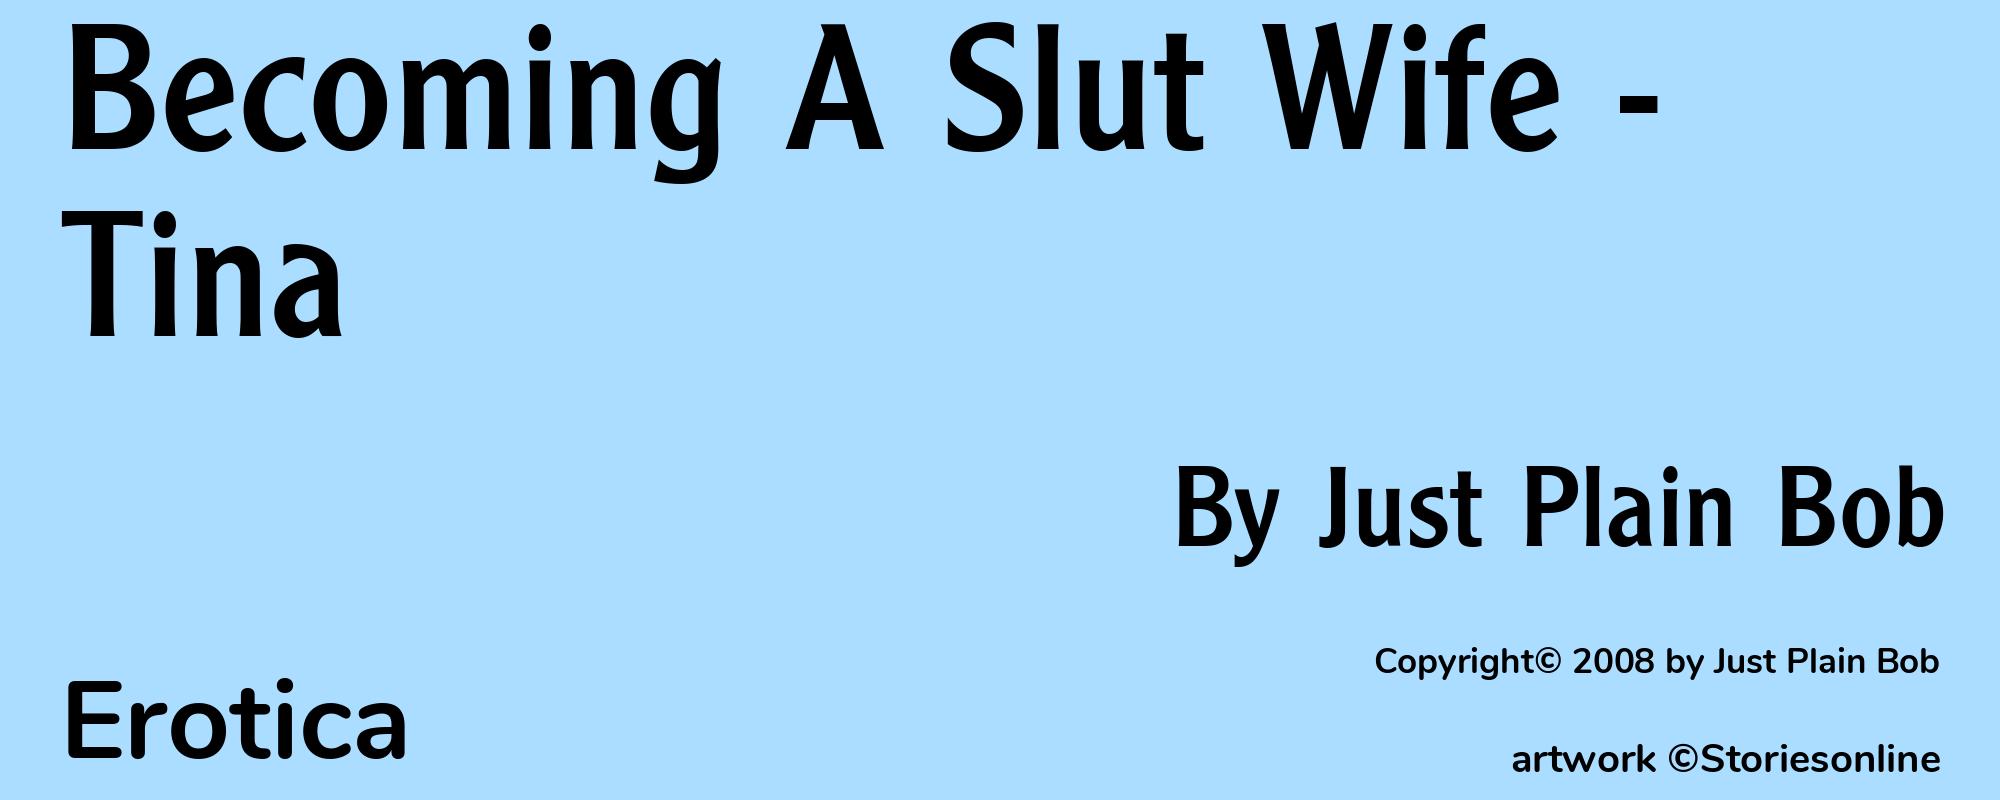 Becoming A Slut Wife - Tina - Cover